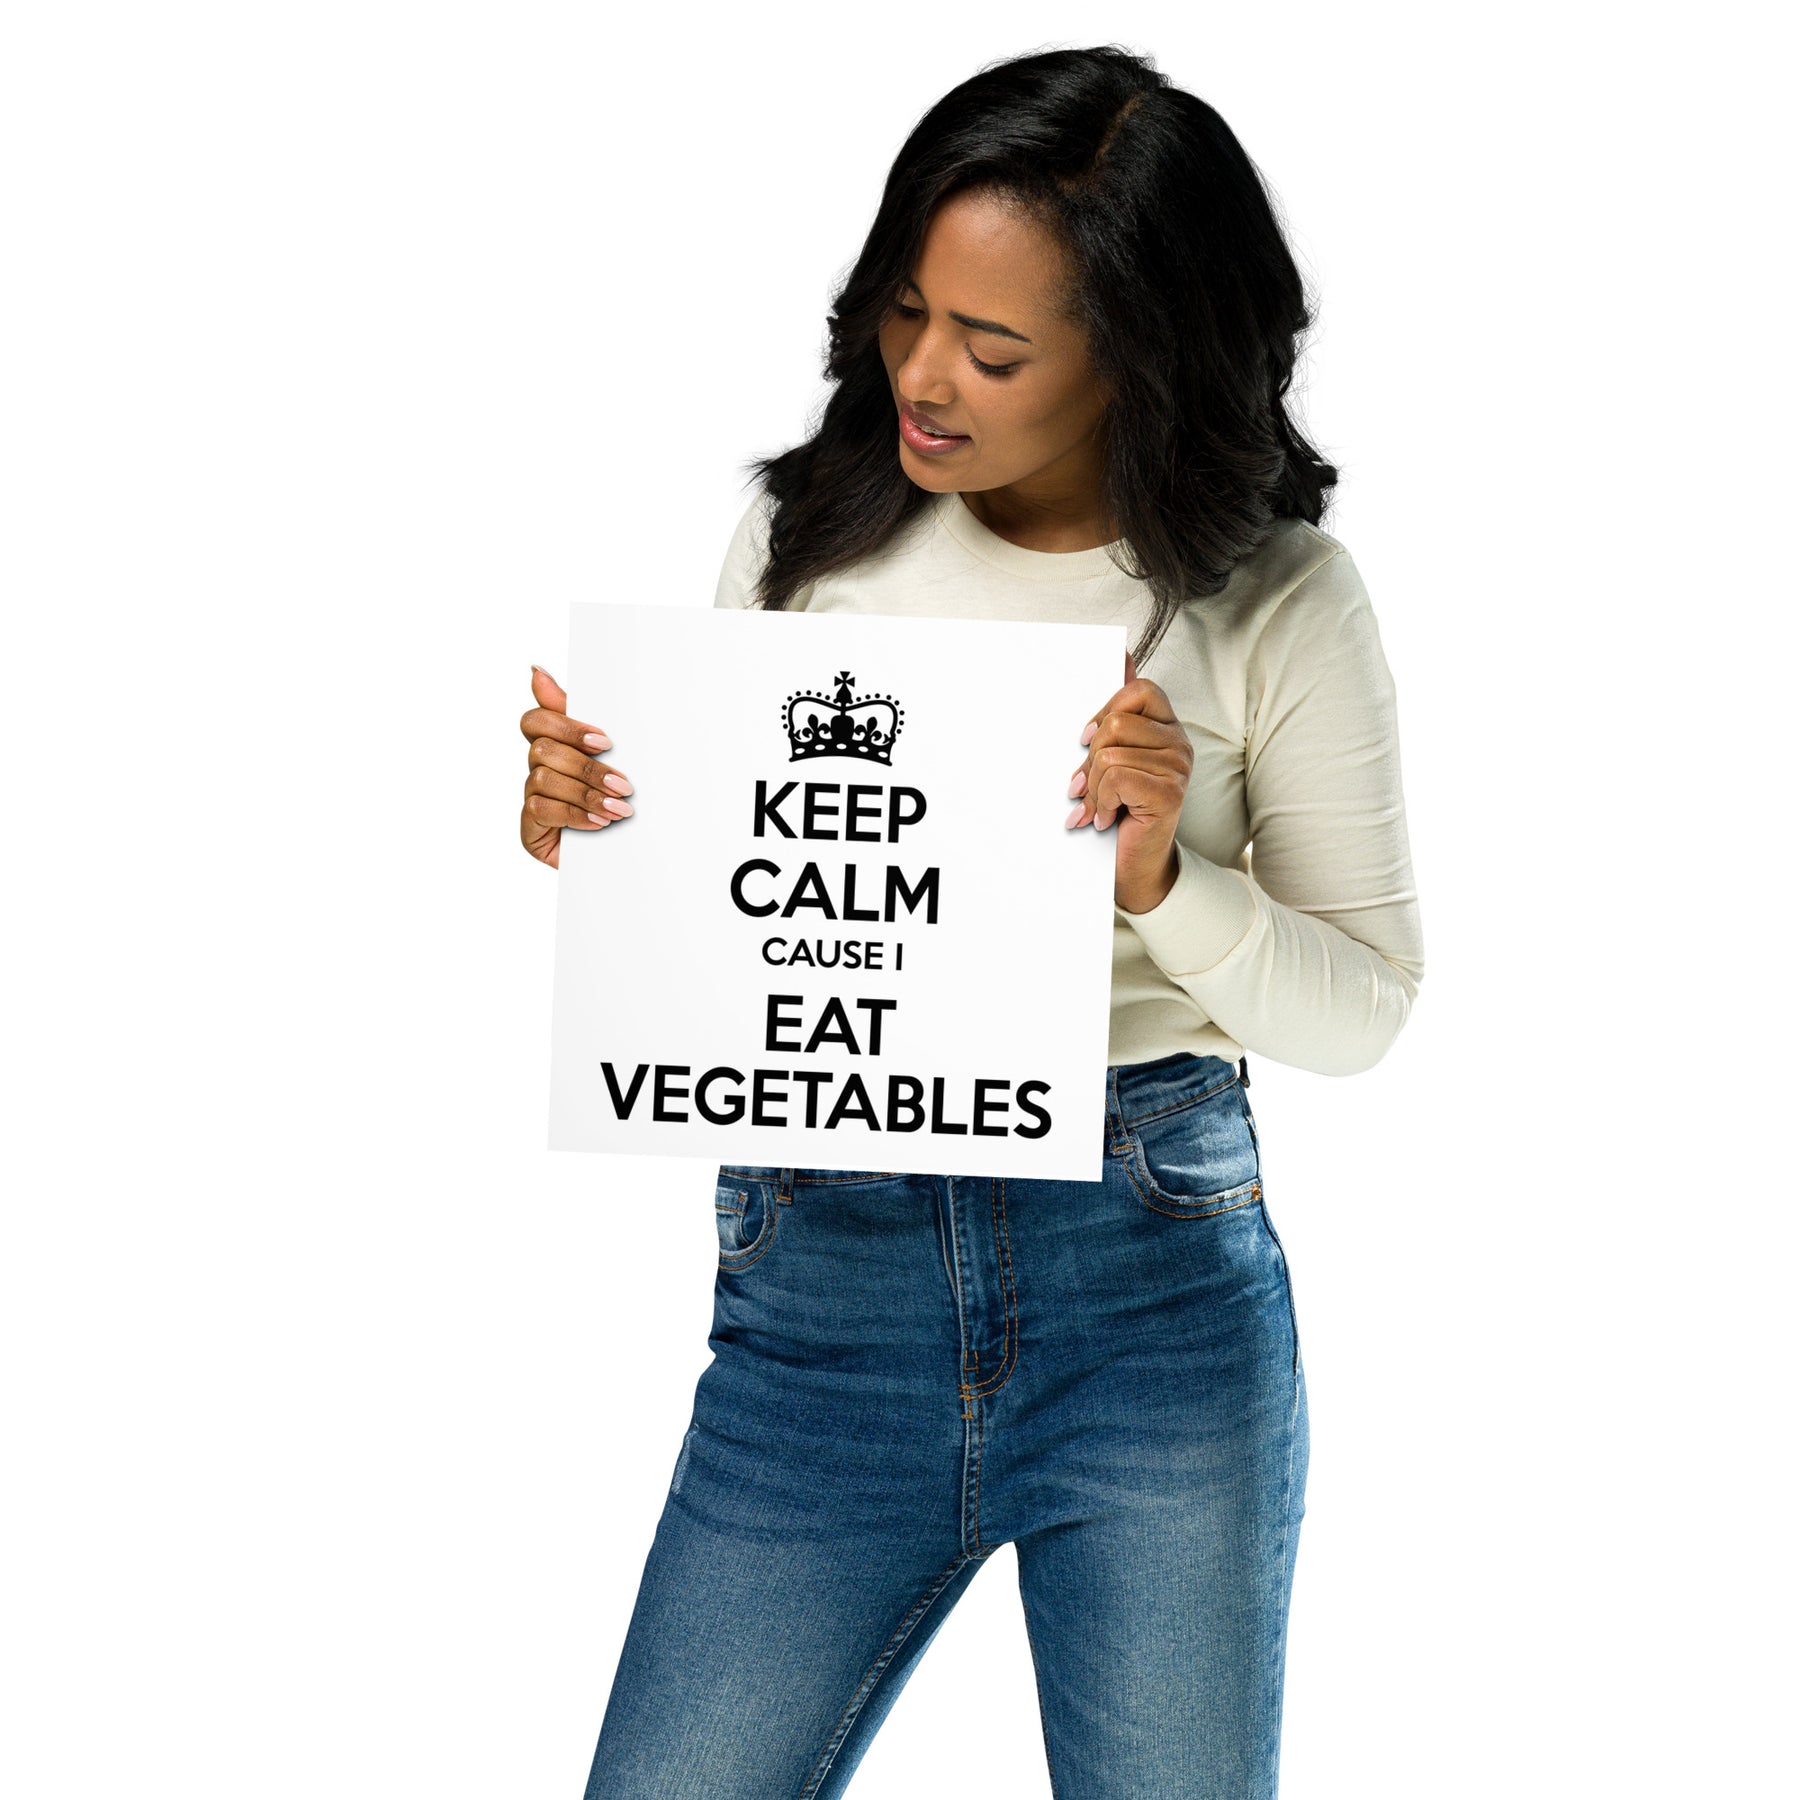 KEEP CALM I EAT VEGETABLES Poster